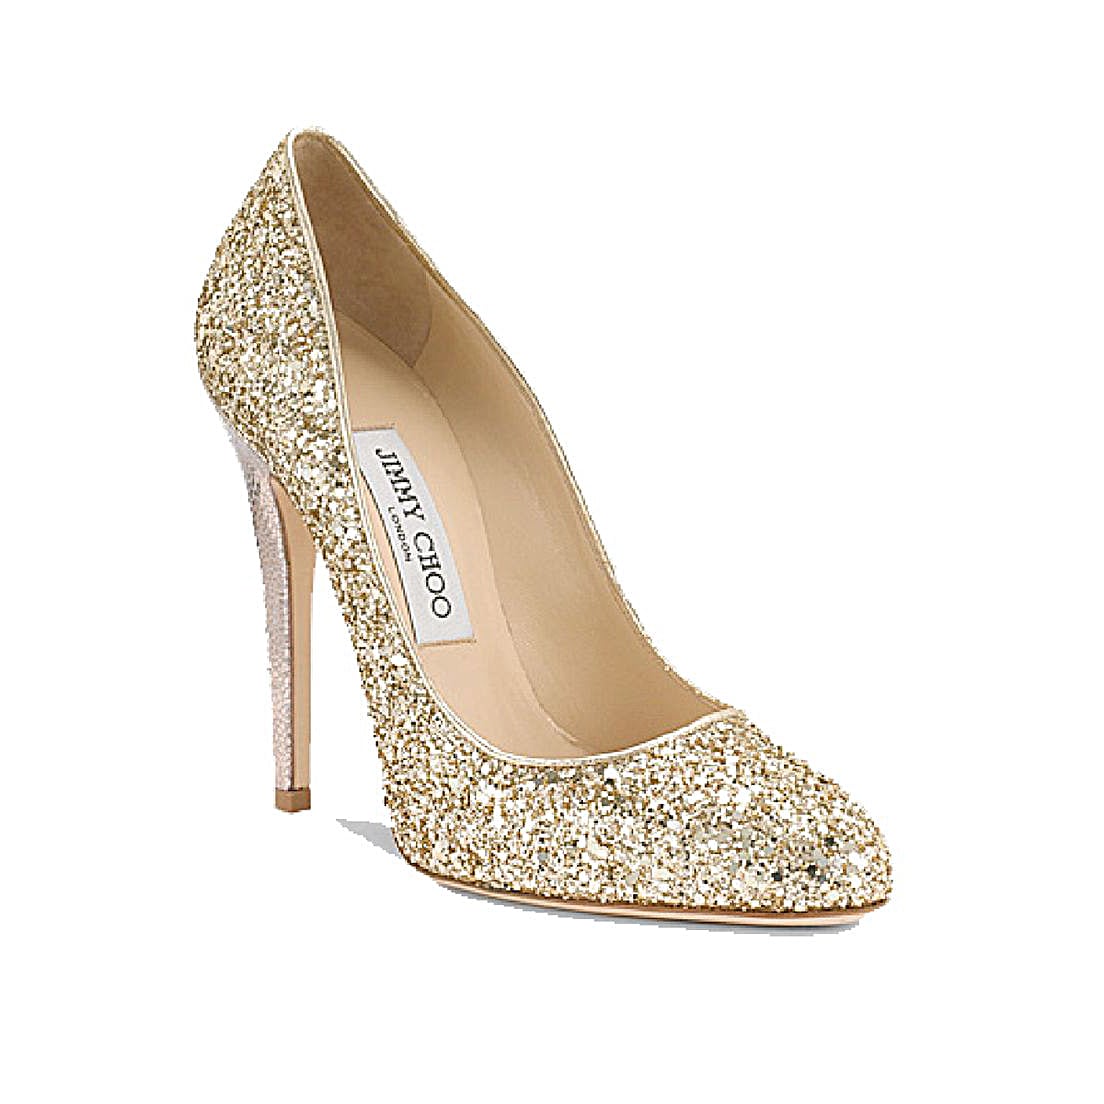 jimmy choo gold glitter heels